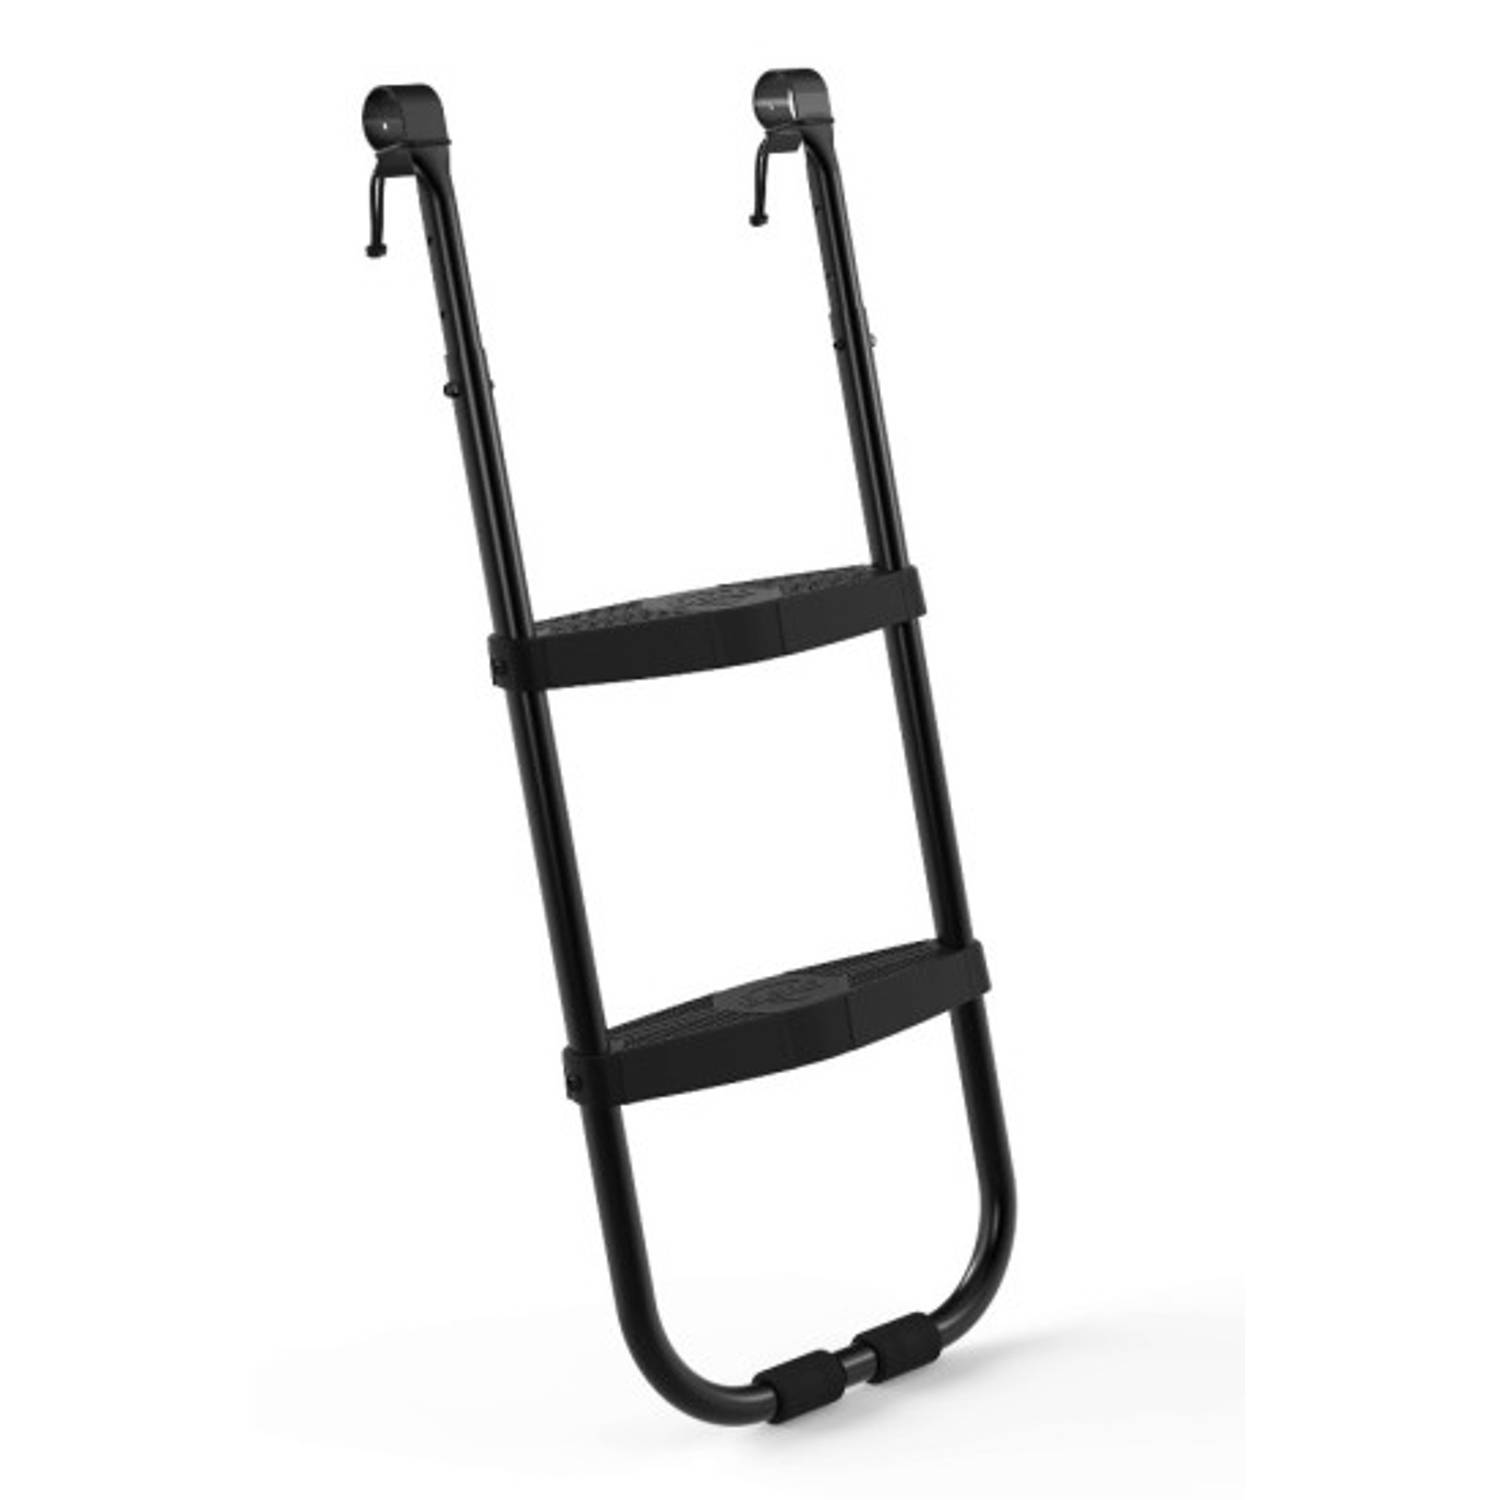 BERG Ladder L voor Rechthoekige Favorit Trampoline - 410 cm